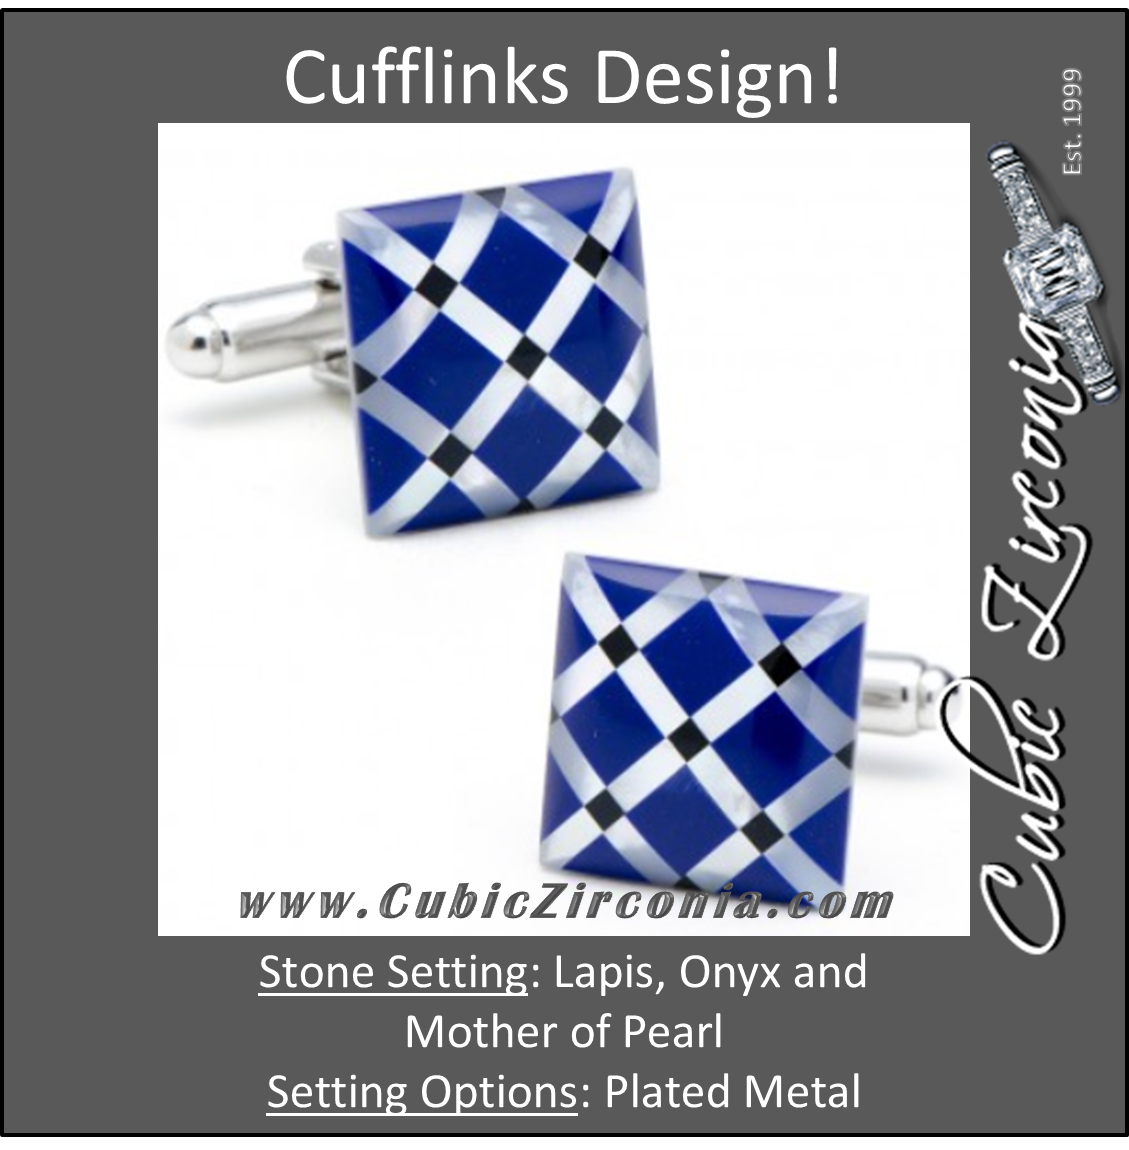 Men’s Cufflinks- Impactful Diamond-Pattern Lapis, Onyx and Mother of Pearl